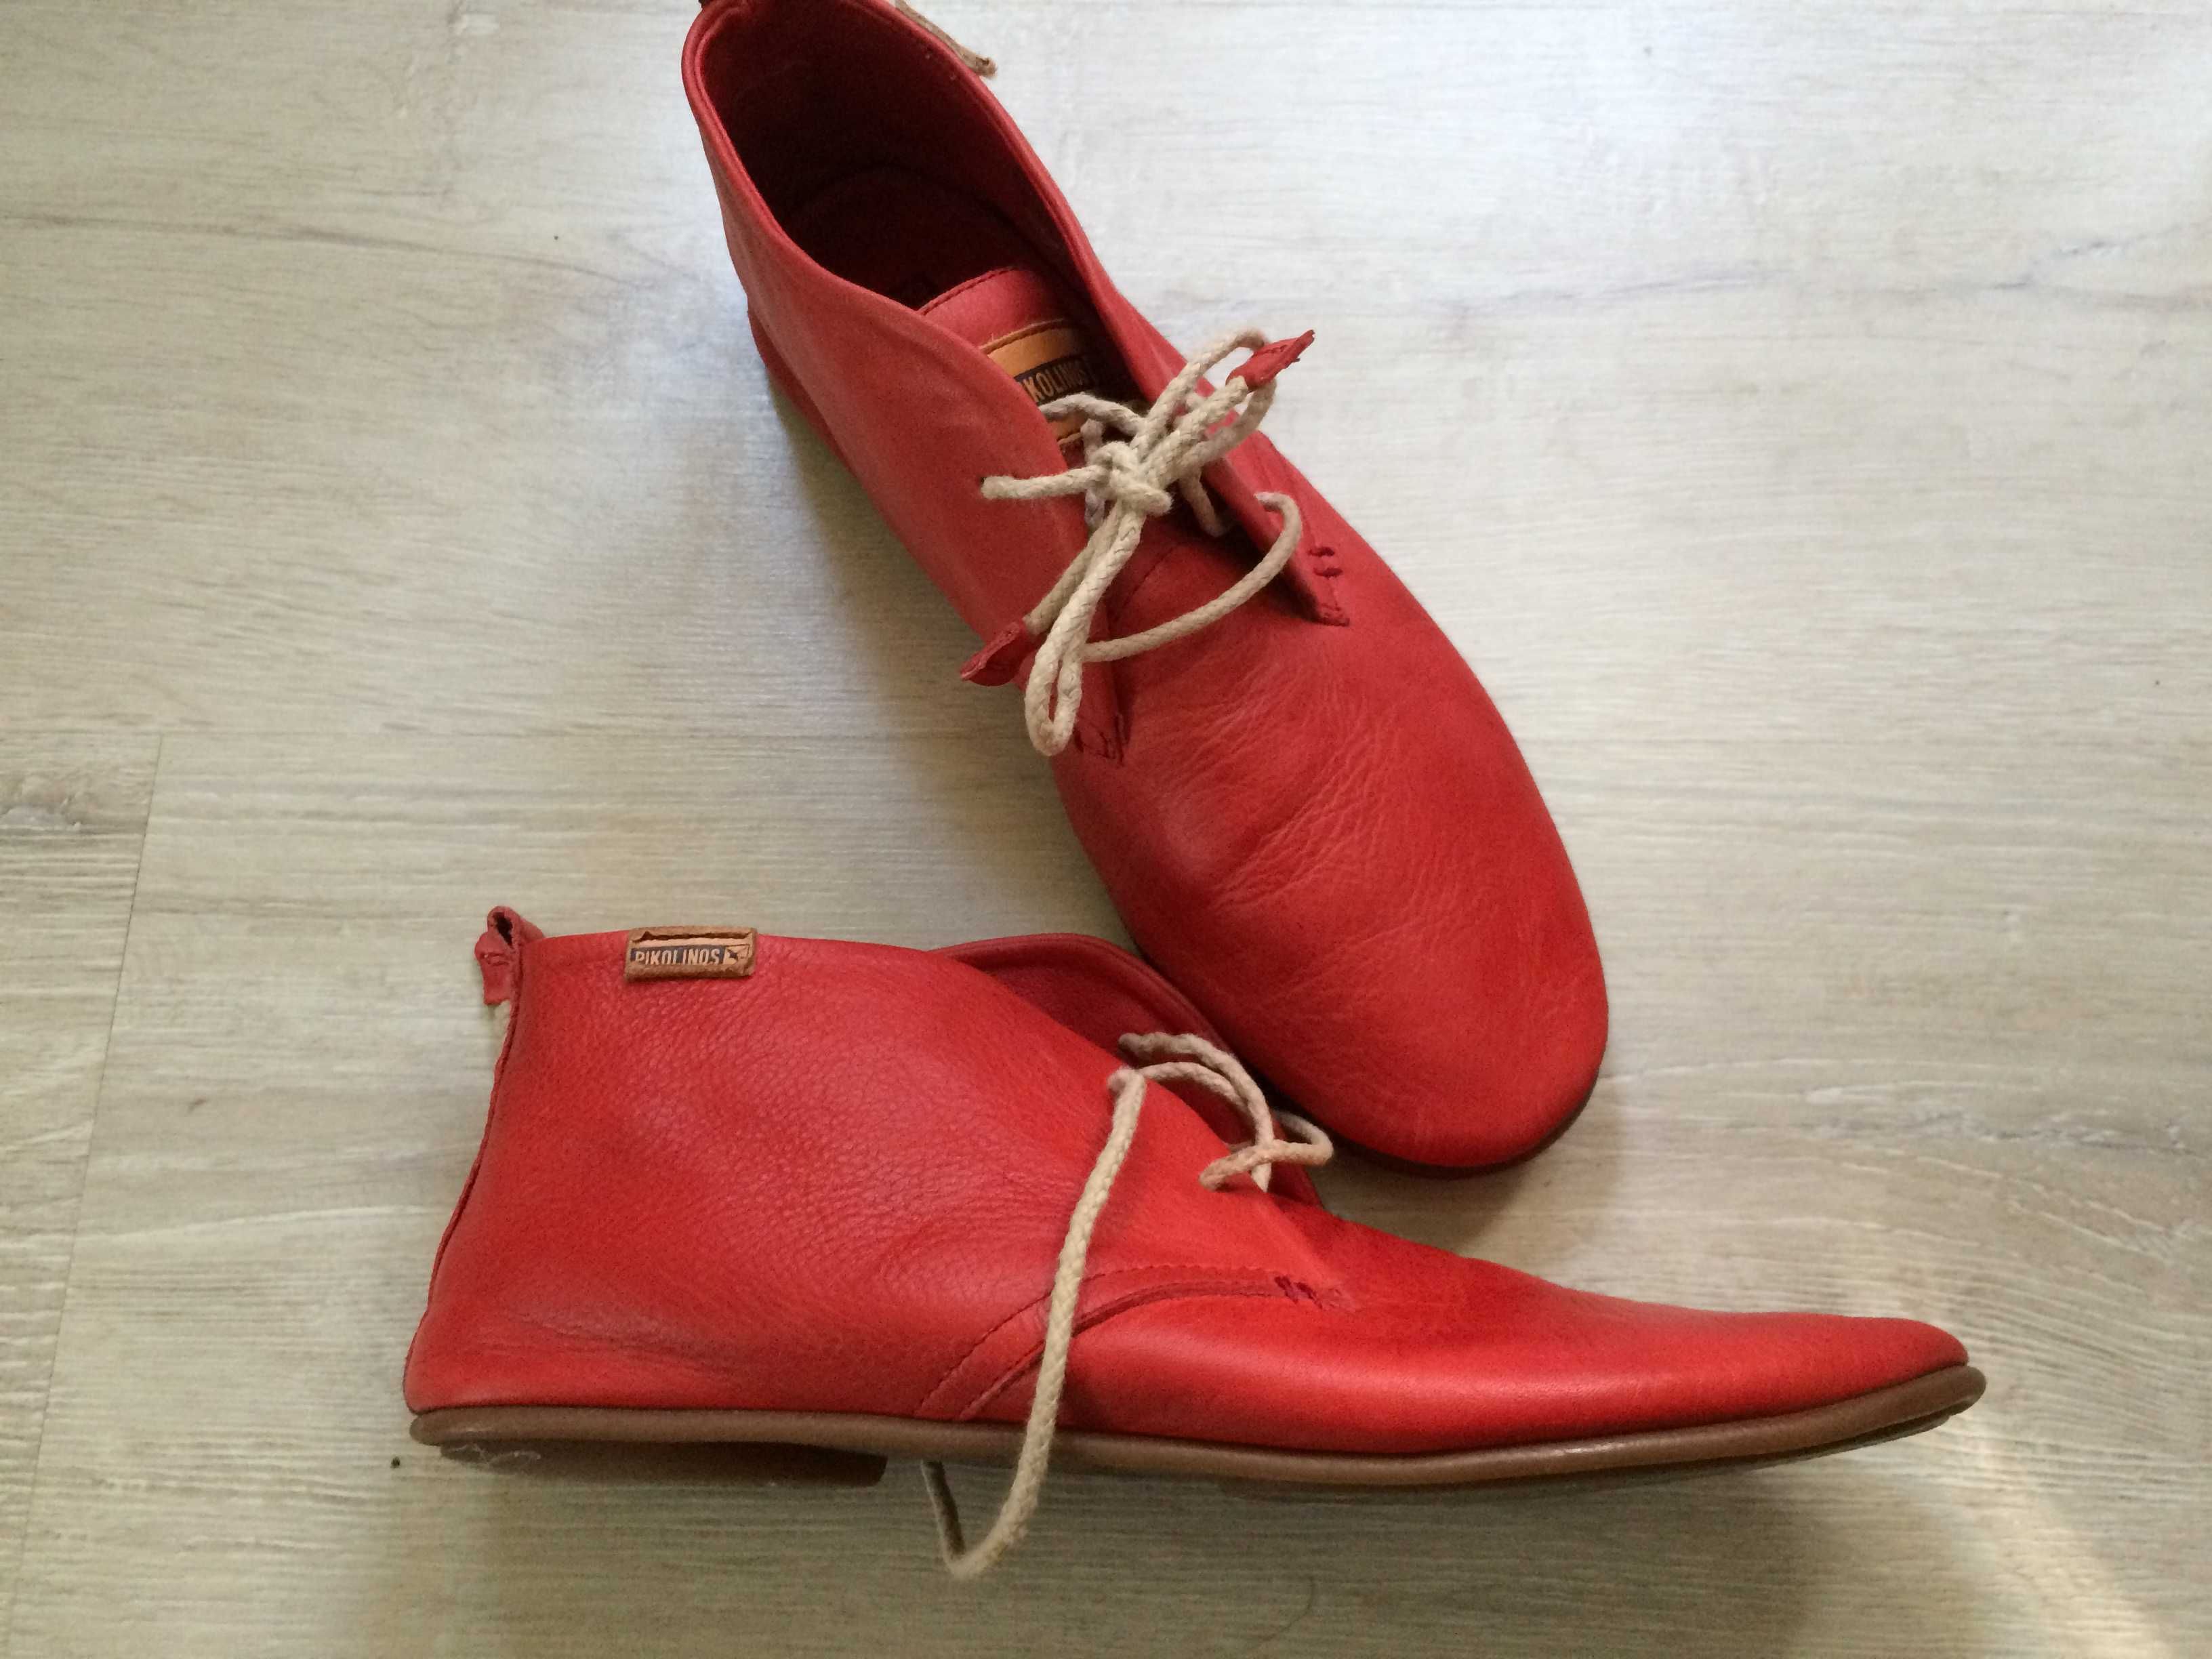 Свежарски червени обувки PIKOLINOS  №38.Естественна кожа.